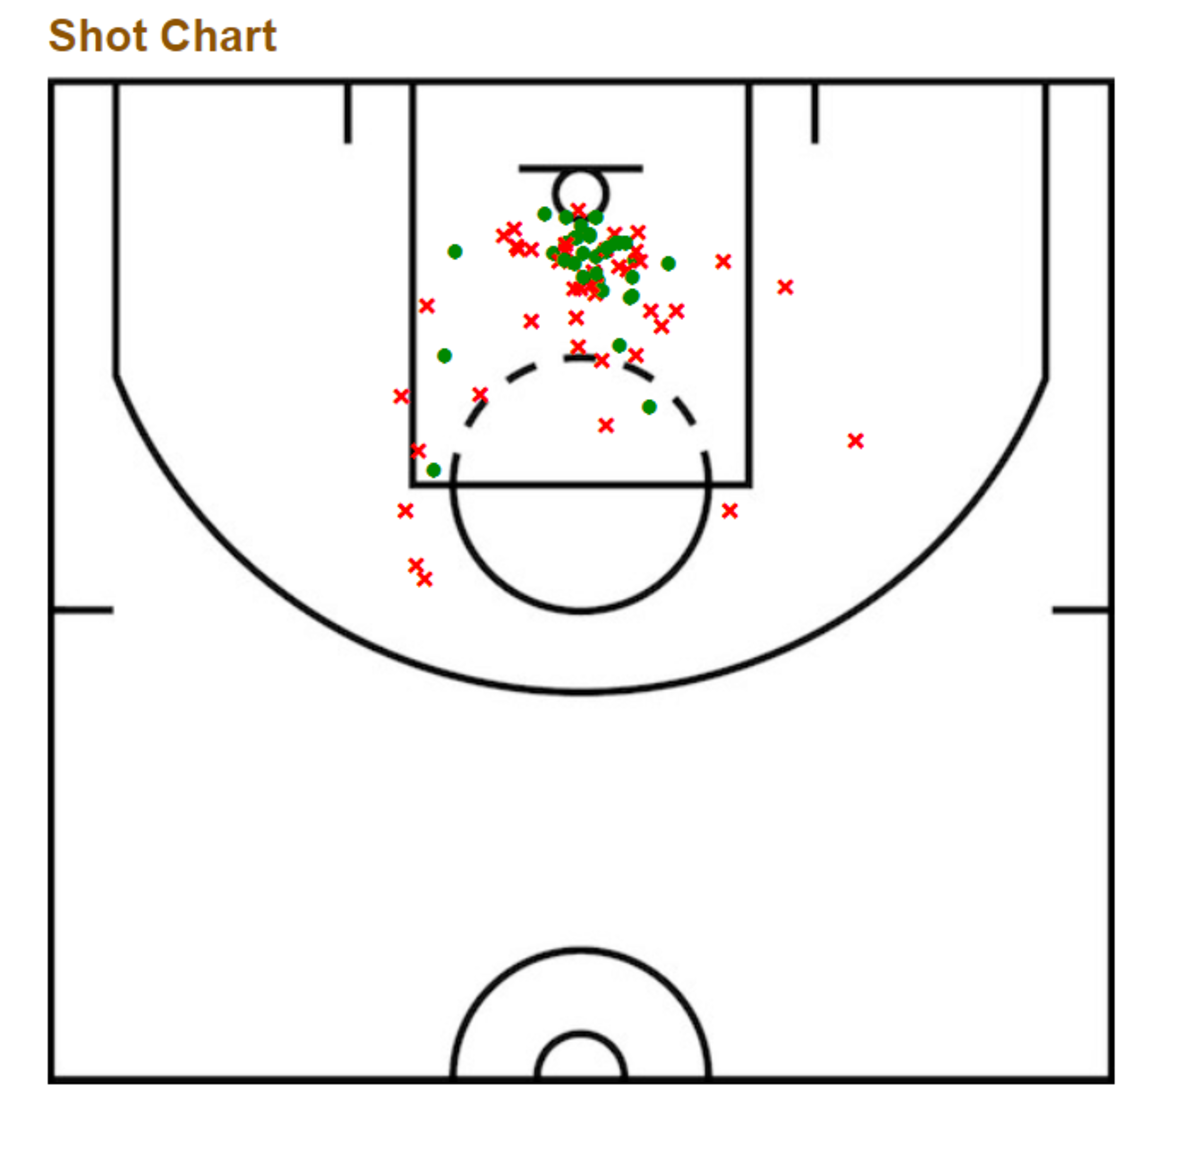 Simmons shot chart